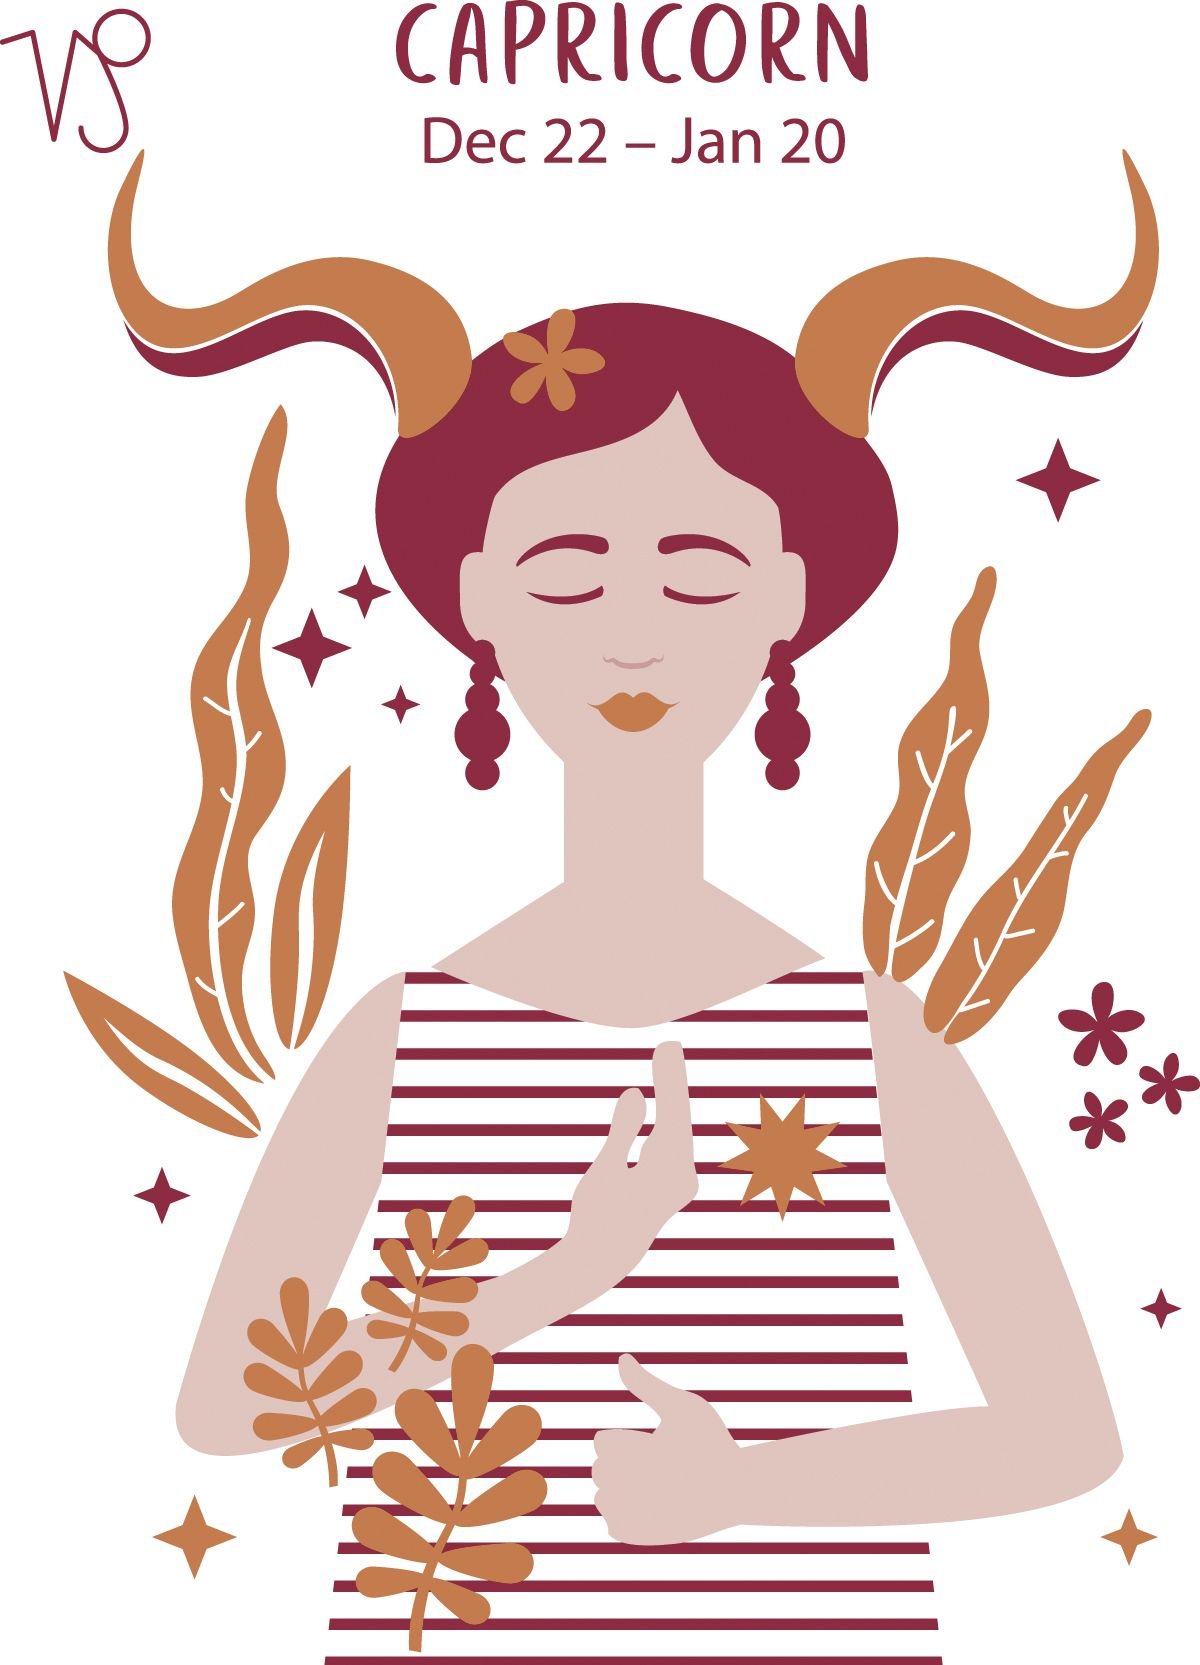 A feminine representation of the Horoscope sign for Capricorn.